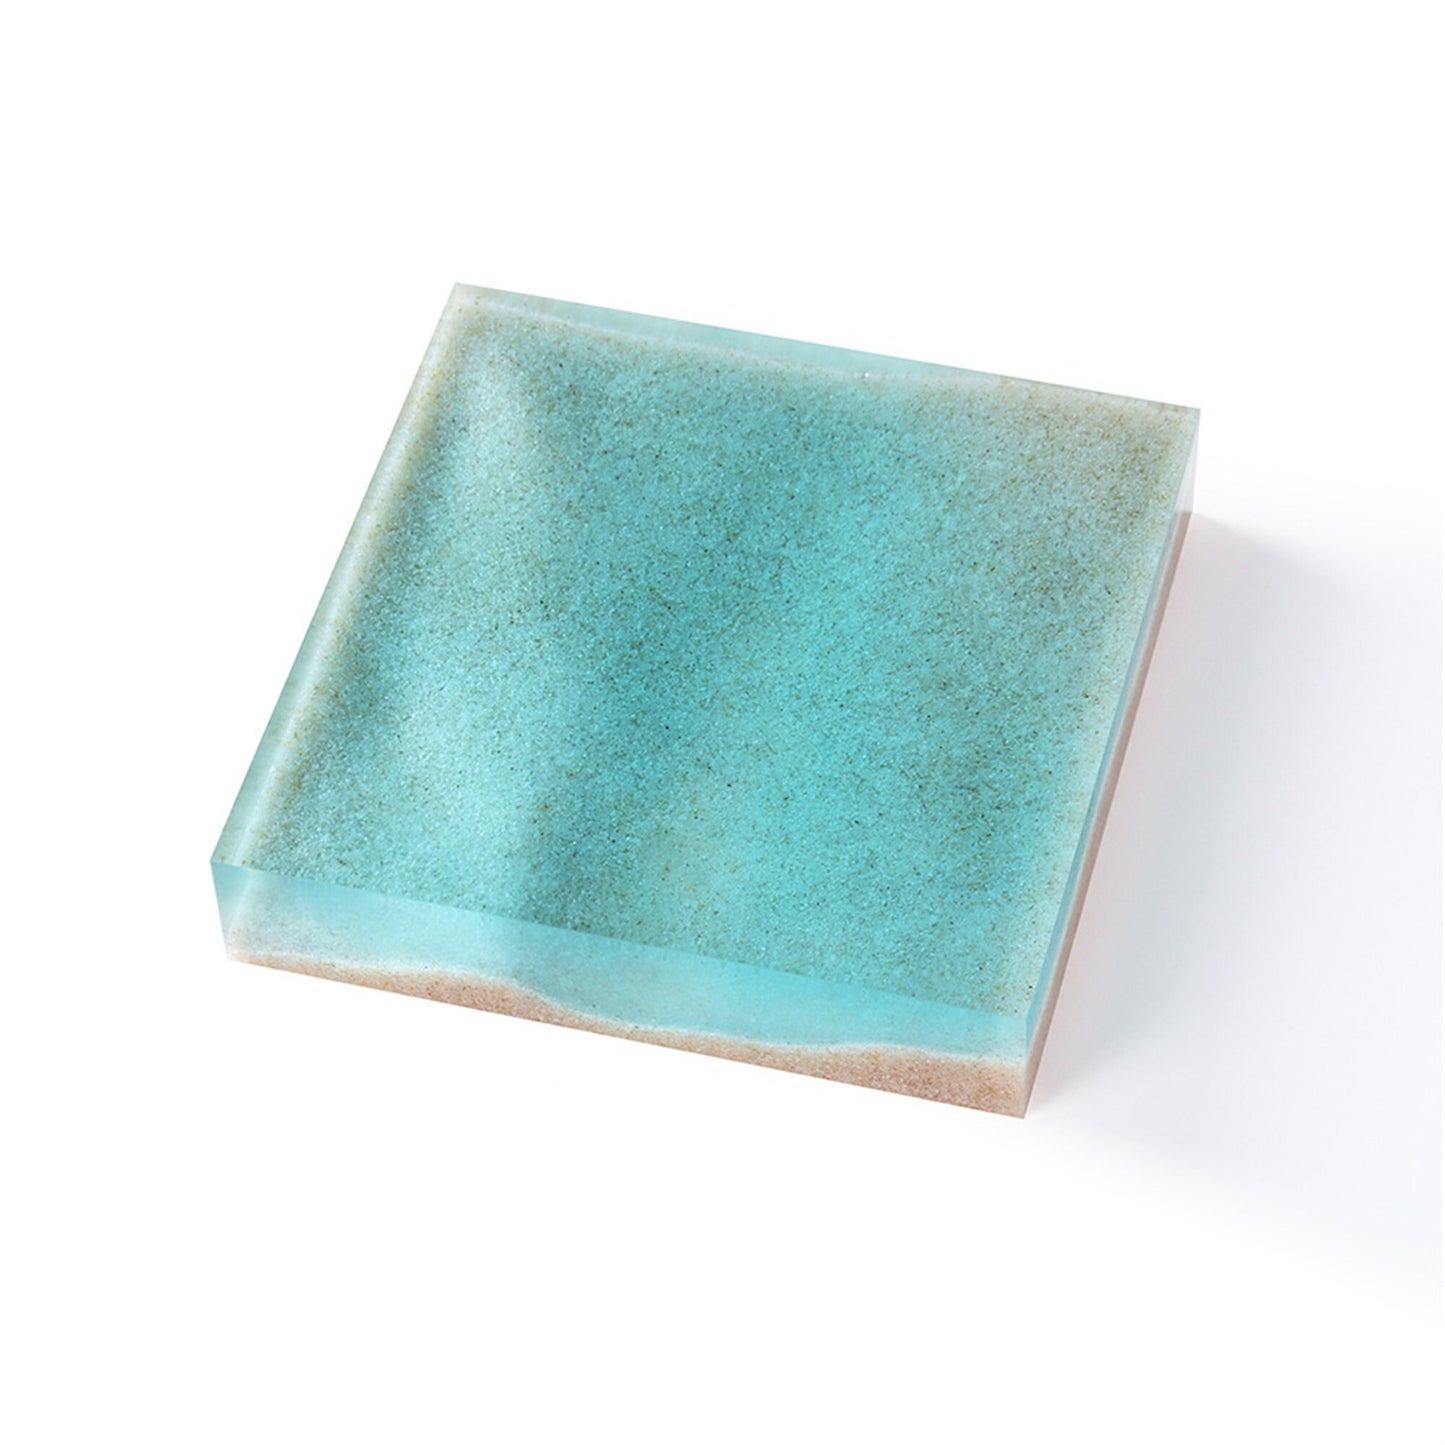 Handmade Transparent Blue Resin Beach Coasters-Resin Coasters - Coffee Coaster-Resin Art-Christmas Gift-Housewarming Gift-Home Art Decor